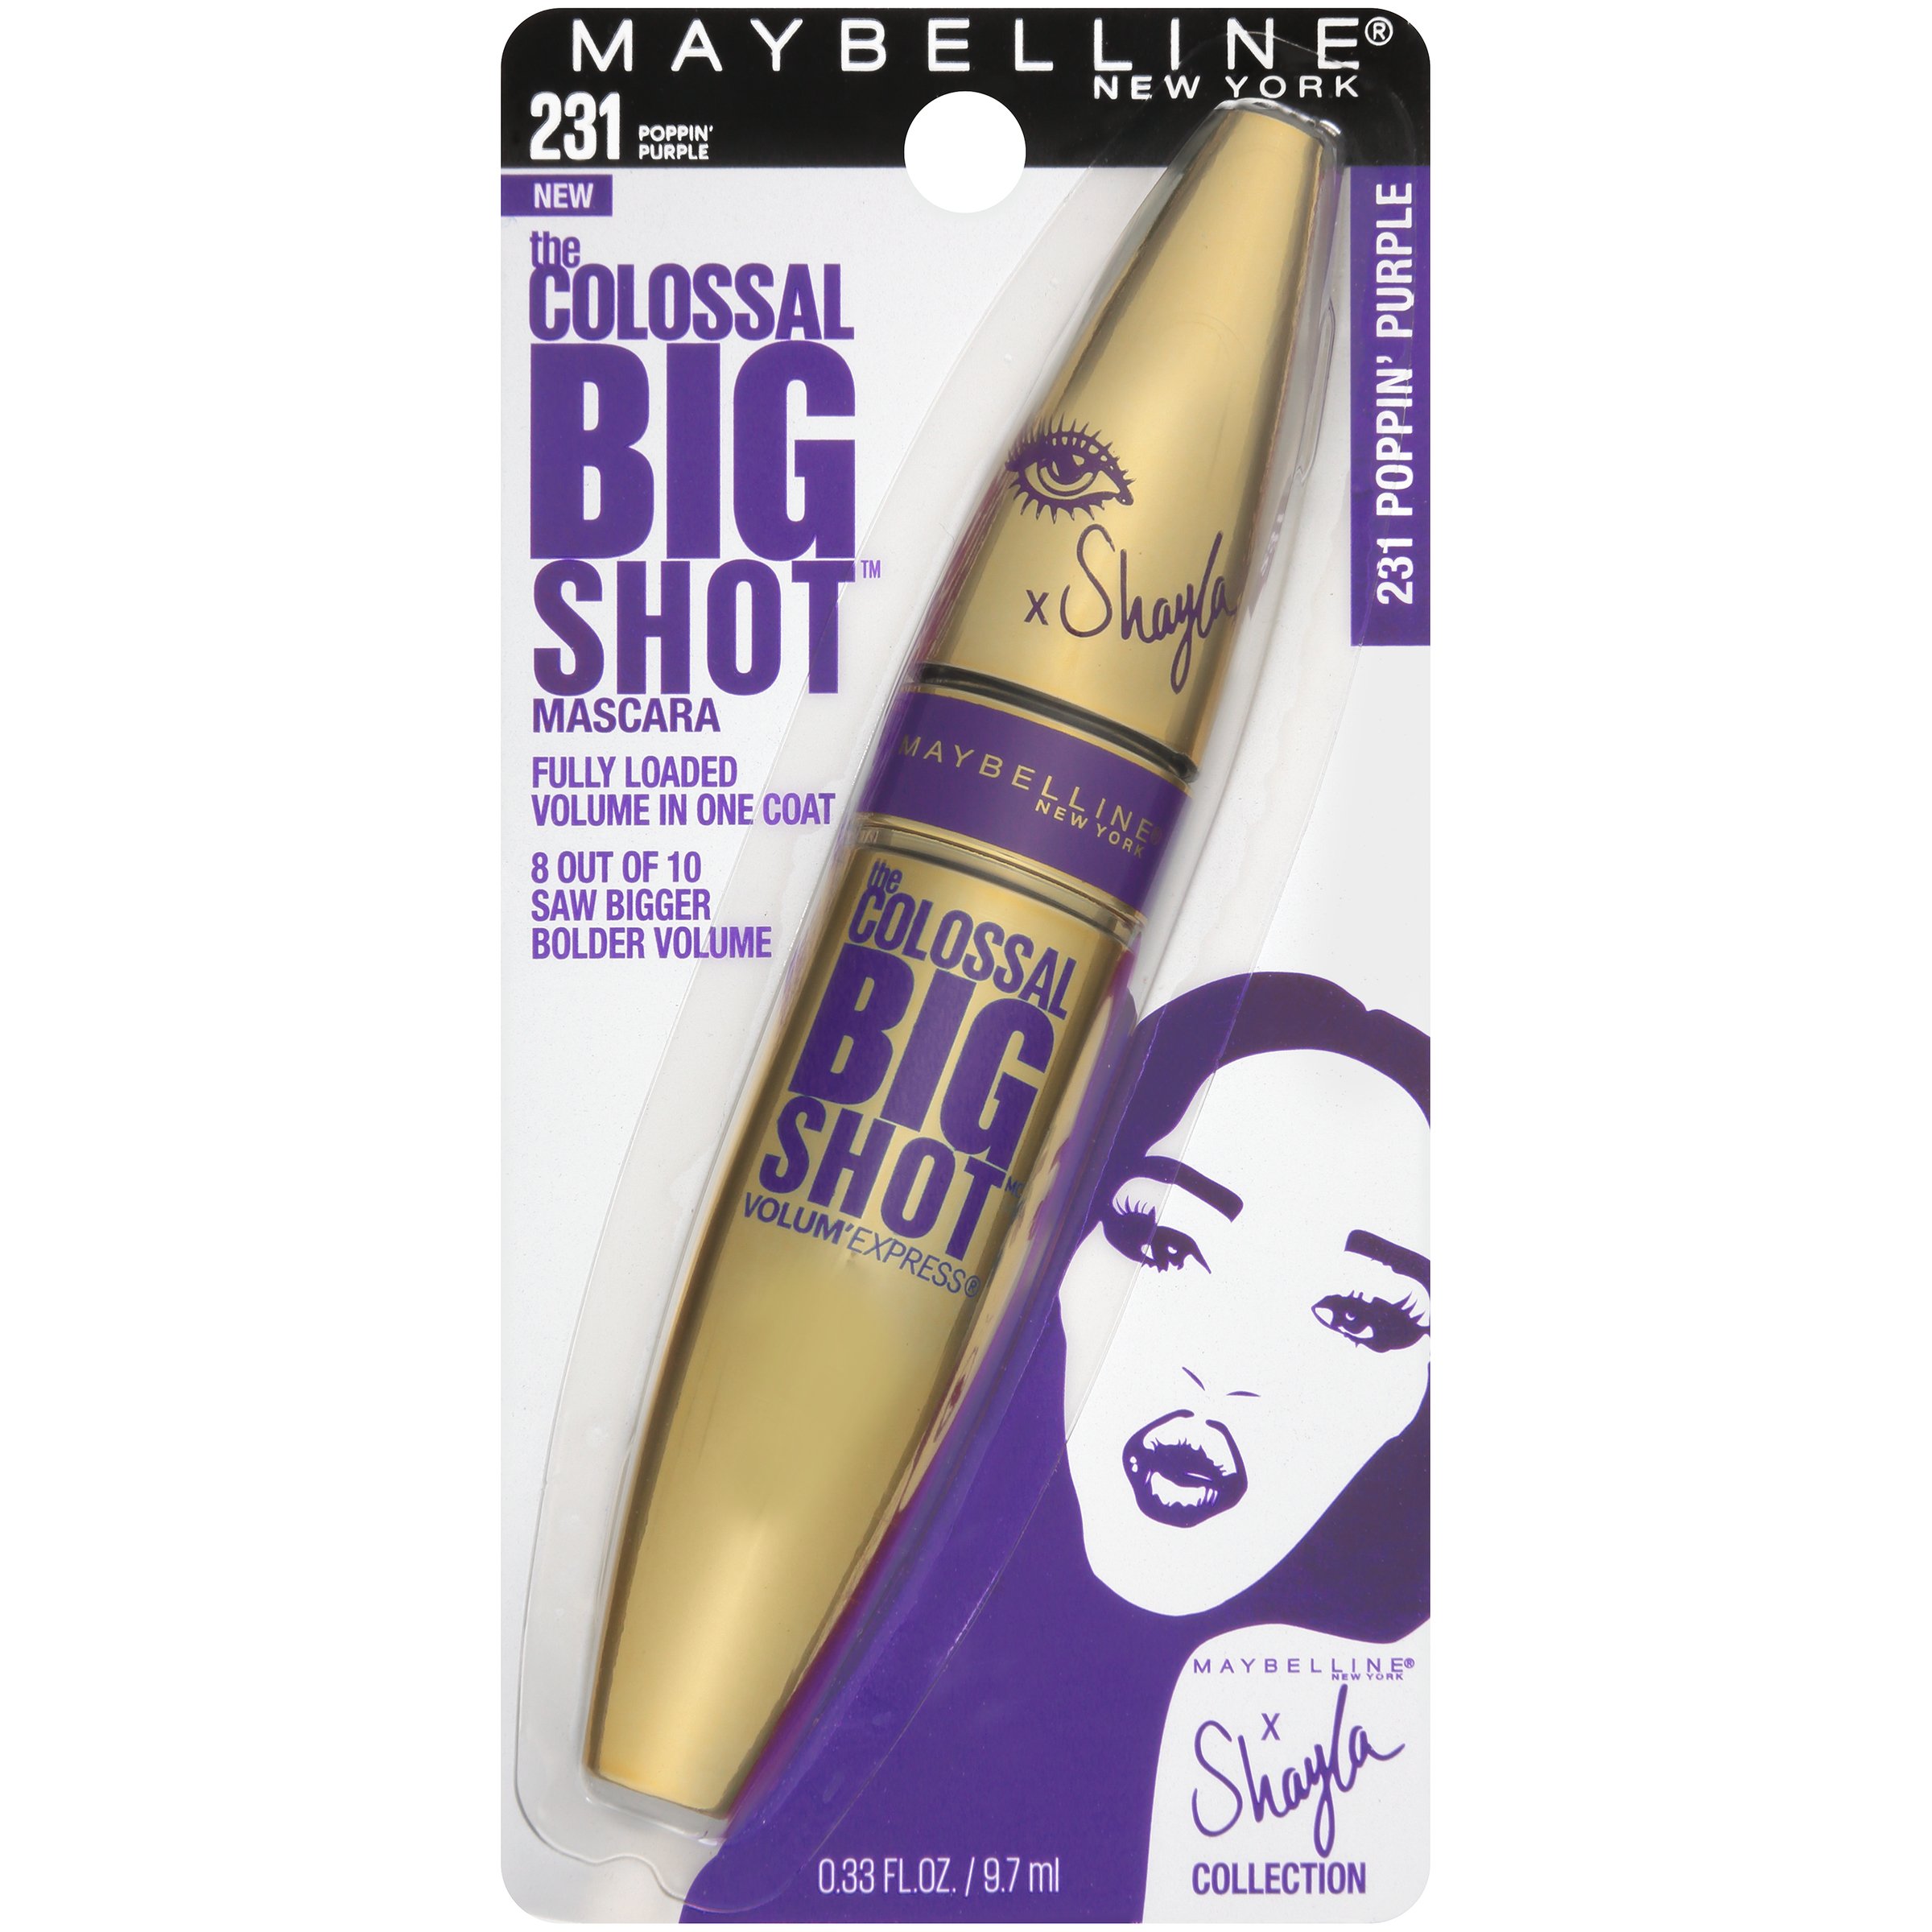 Shop Mascara Volum\' at H-E-B Maybelline Mascara x Big Colossal Shot Purple Poppin\' The Express - Shayla,